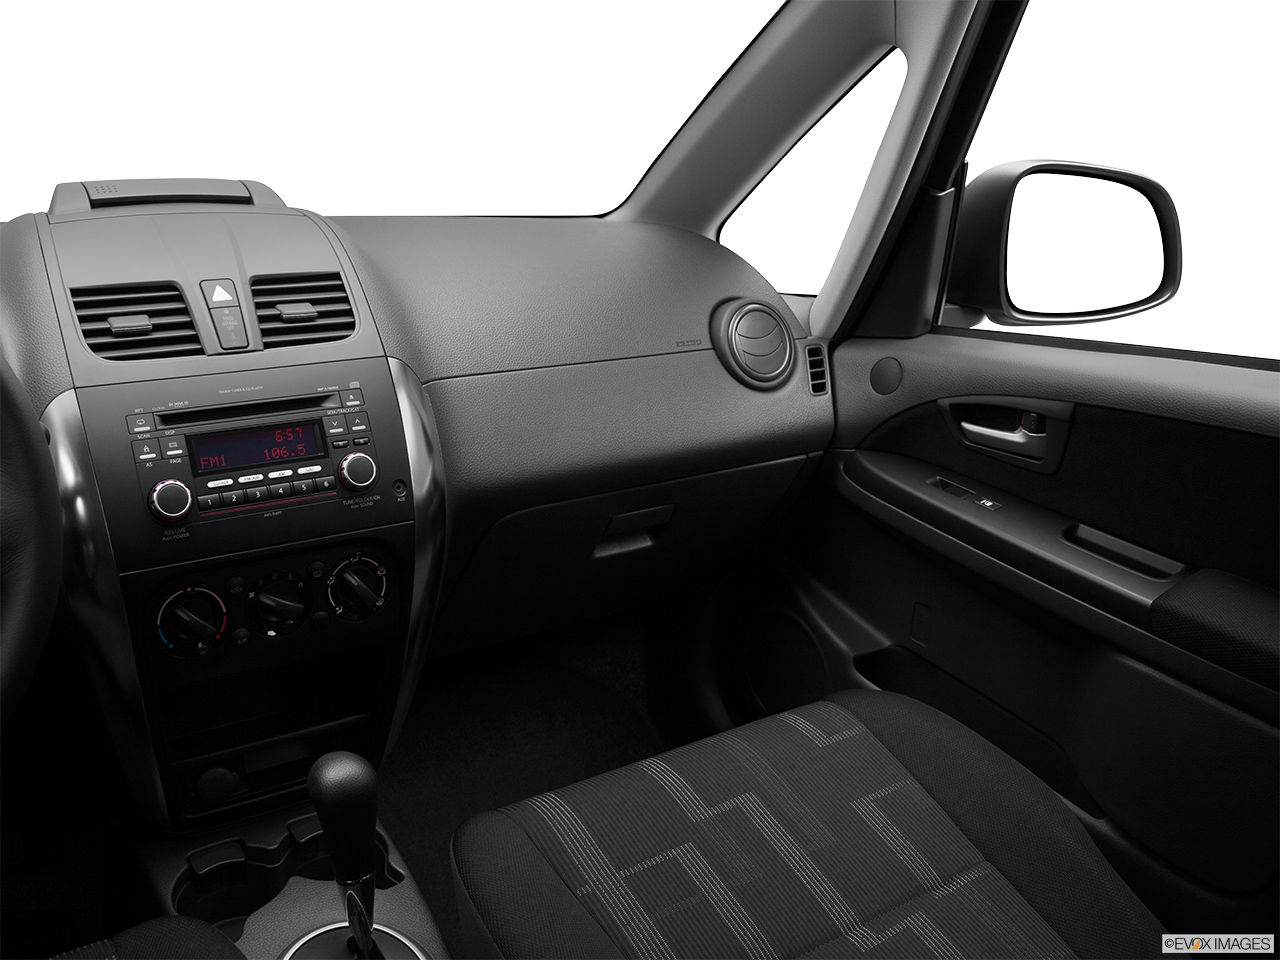 2011 Suzuki SX4 Sportback Technology Center Console/Passenger Side. 